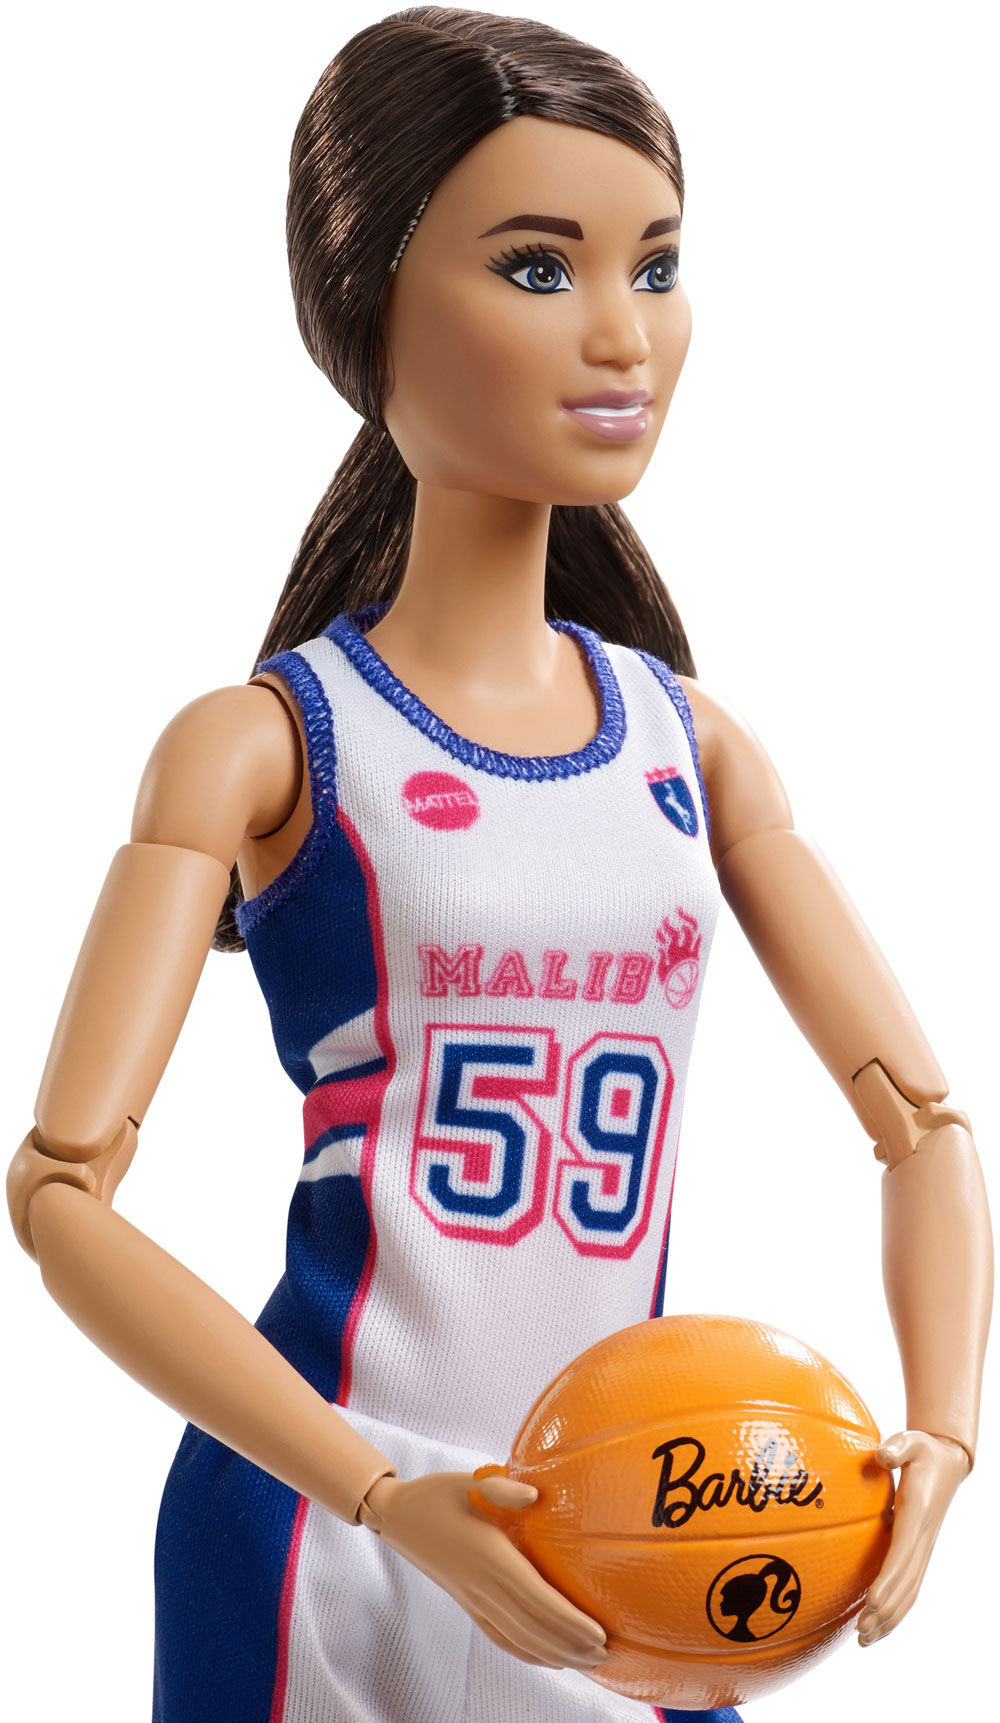 barbie made to move basketball